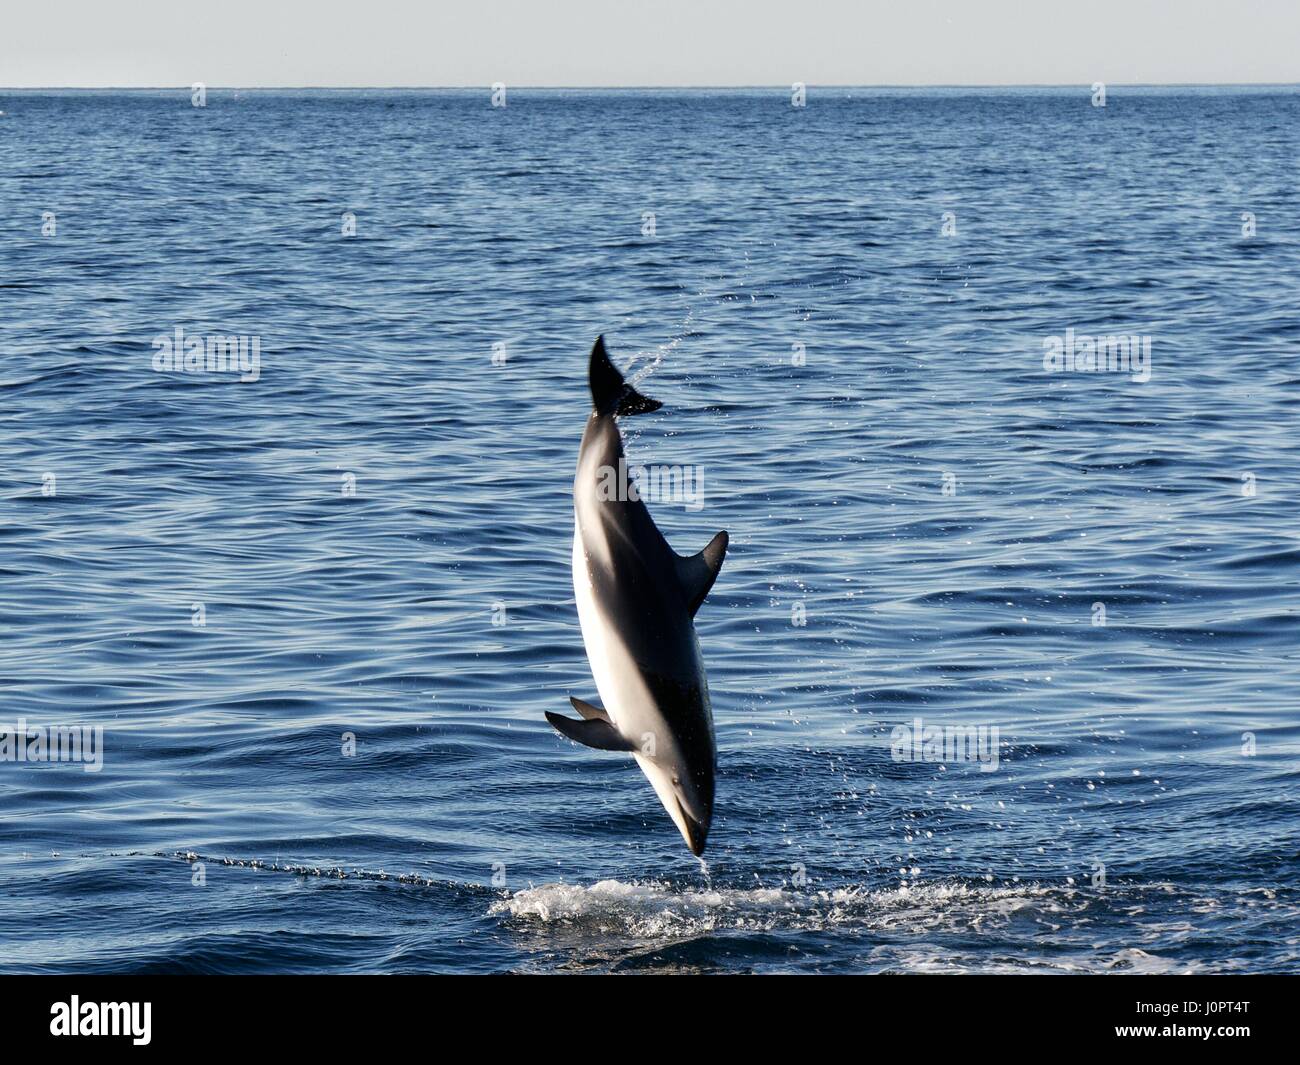 dusky dolphin jumping in the ocean at Kaikoura, New Zealand Stock Photo